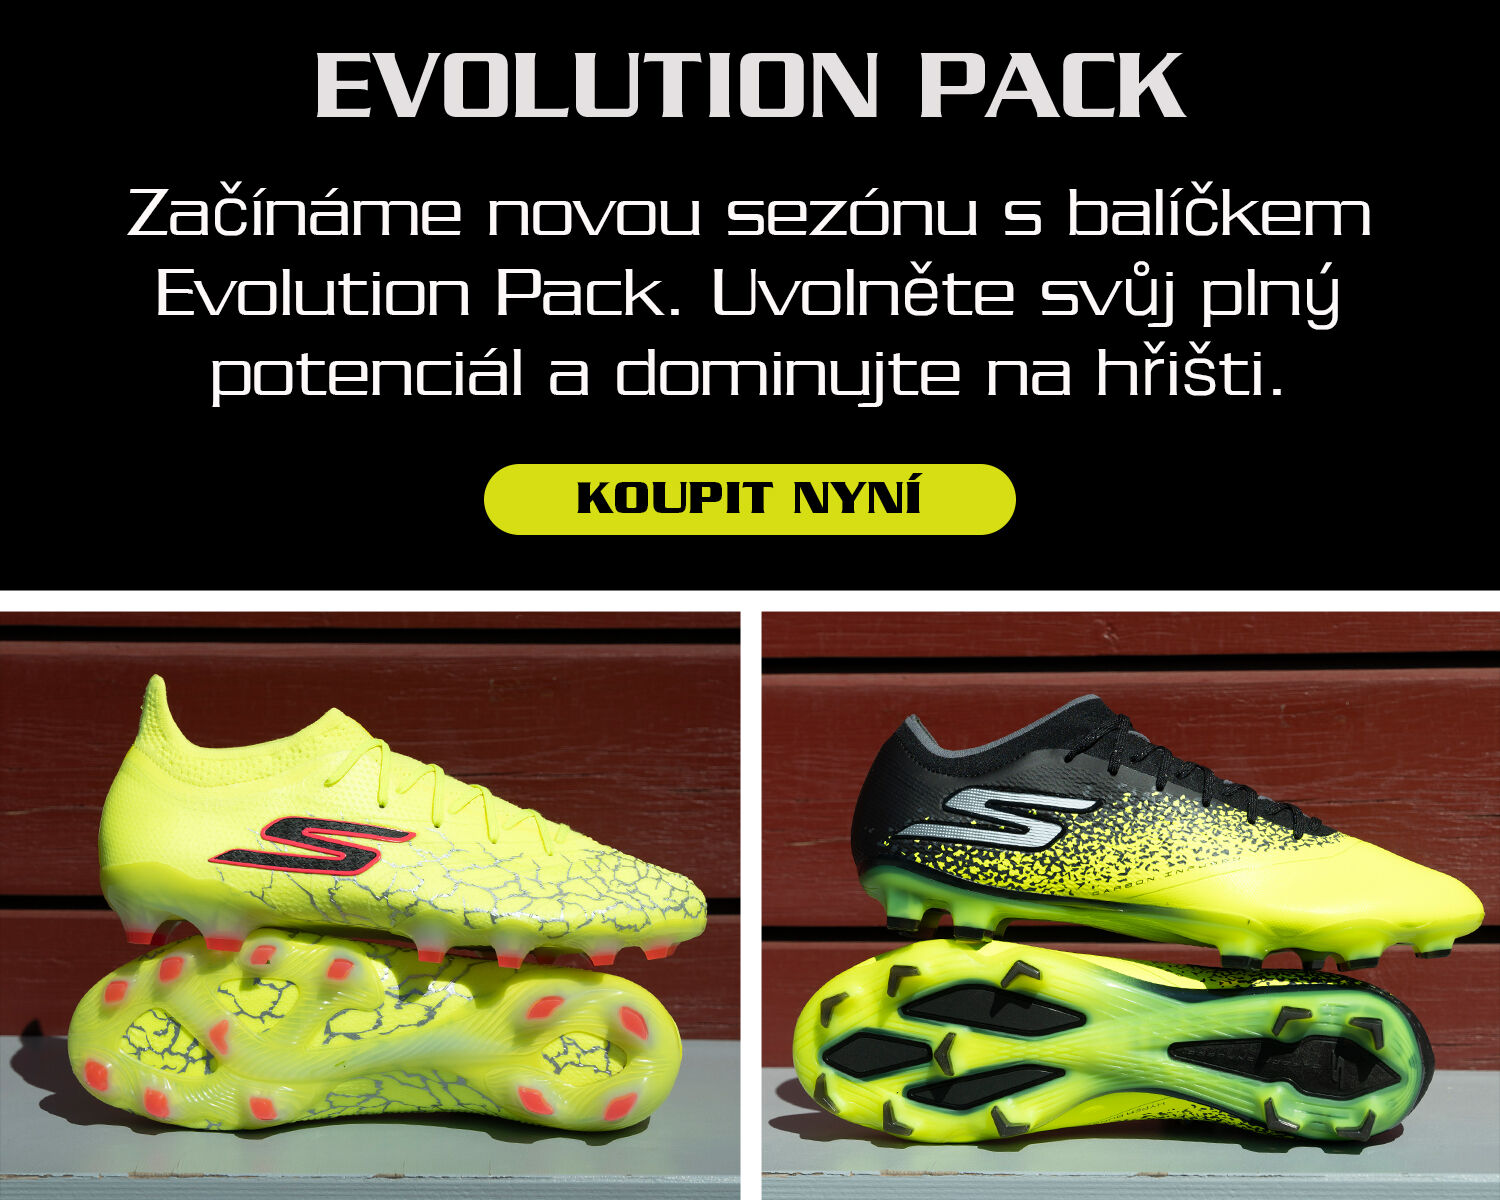 Evolution Pack